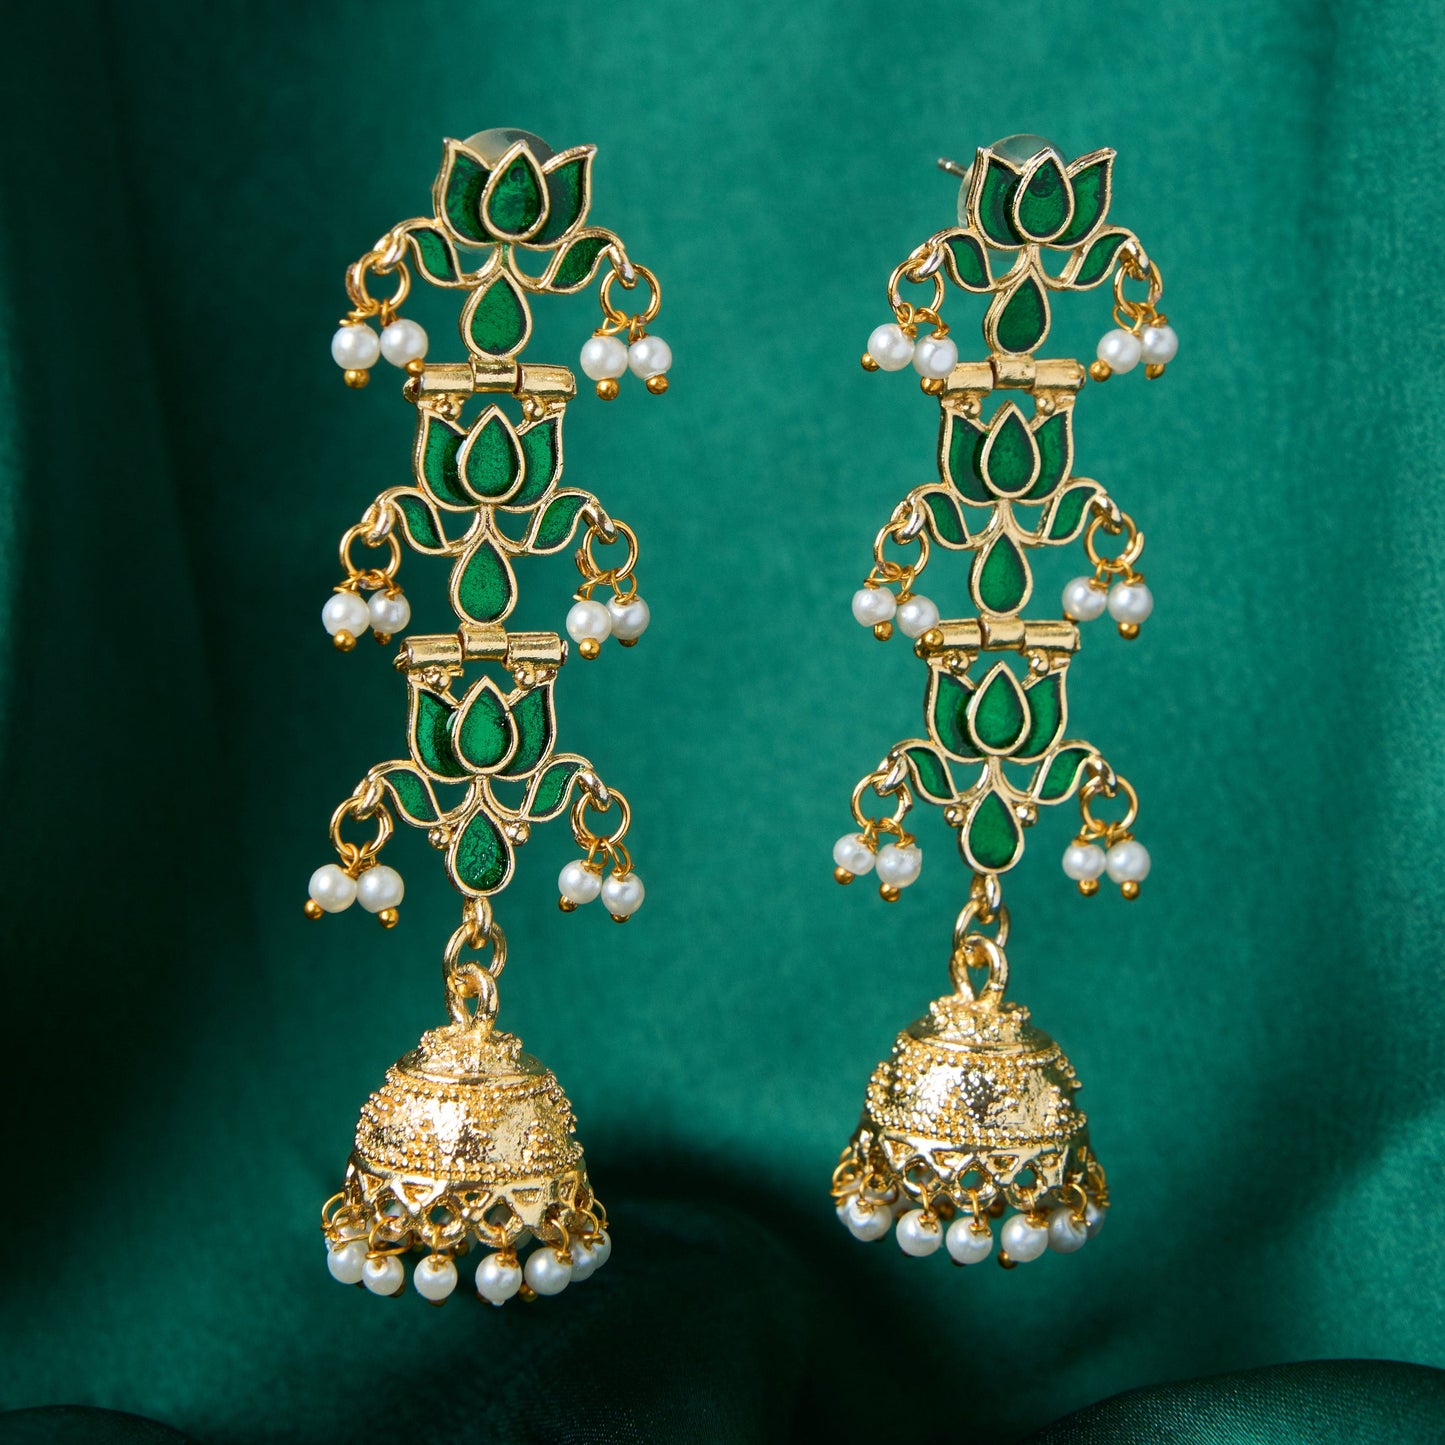 Moonstruck Traditional Indian Golden Meenakari Jhumka/Jhumki Earrings With Pearls for Women (Emerald Green) - www.MoonstruckINC.com